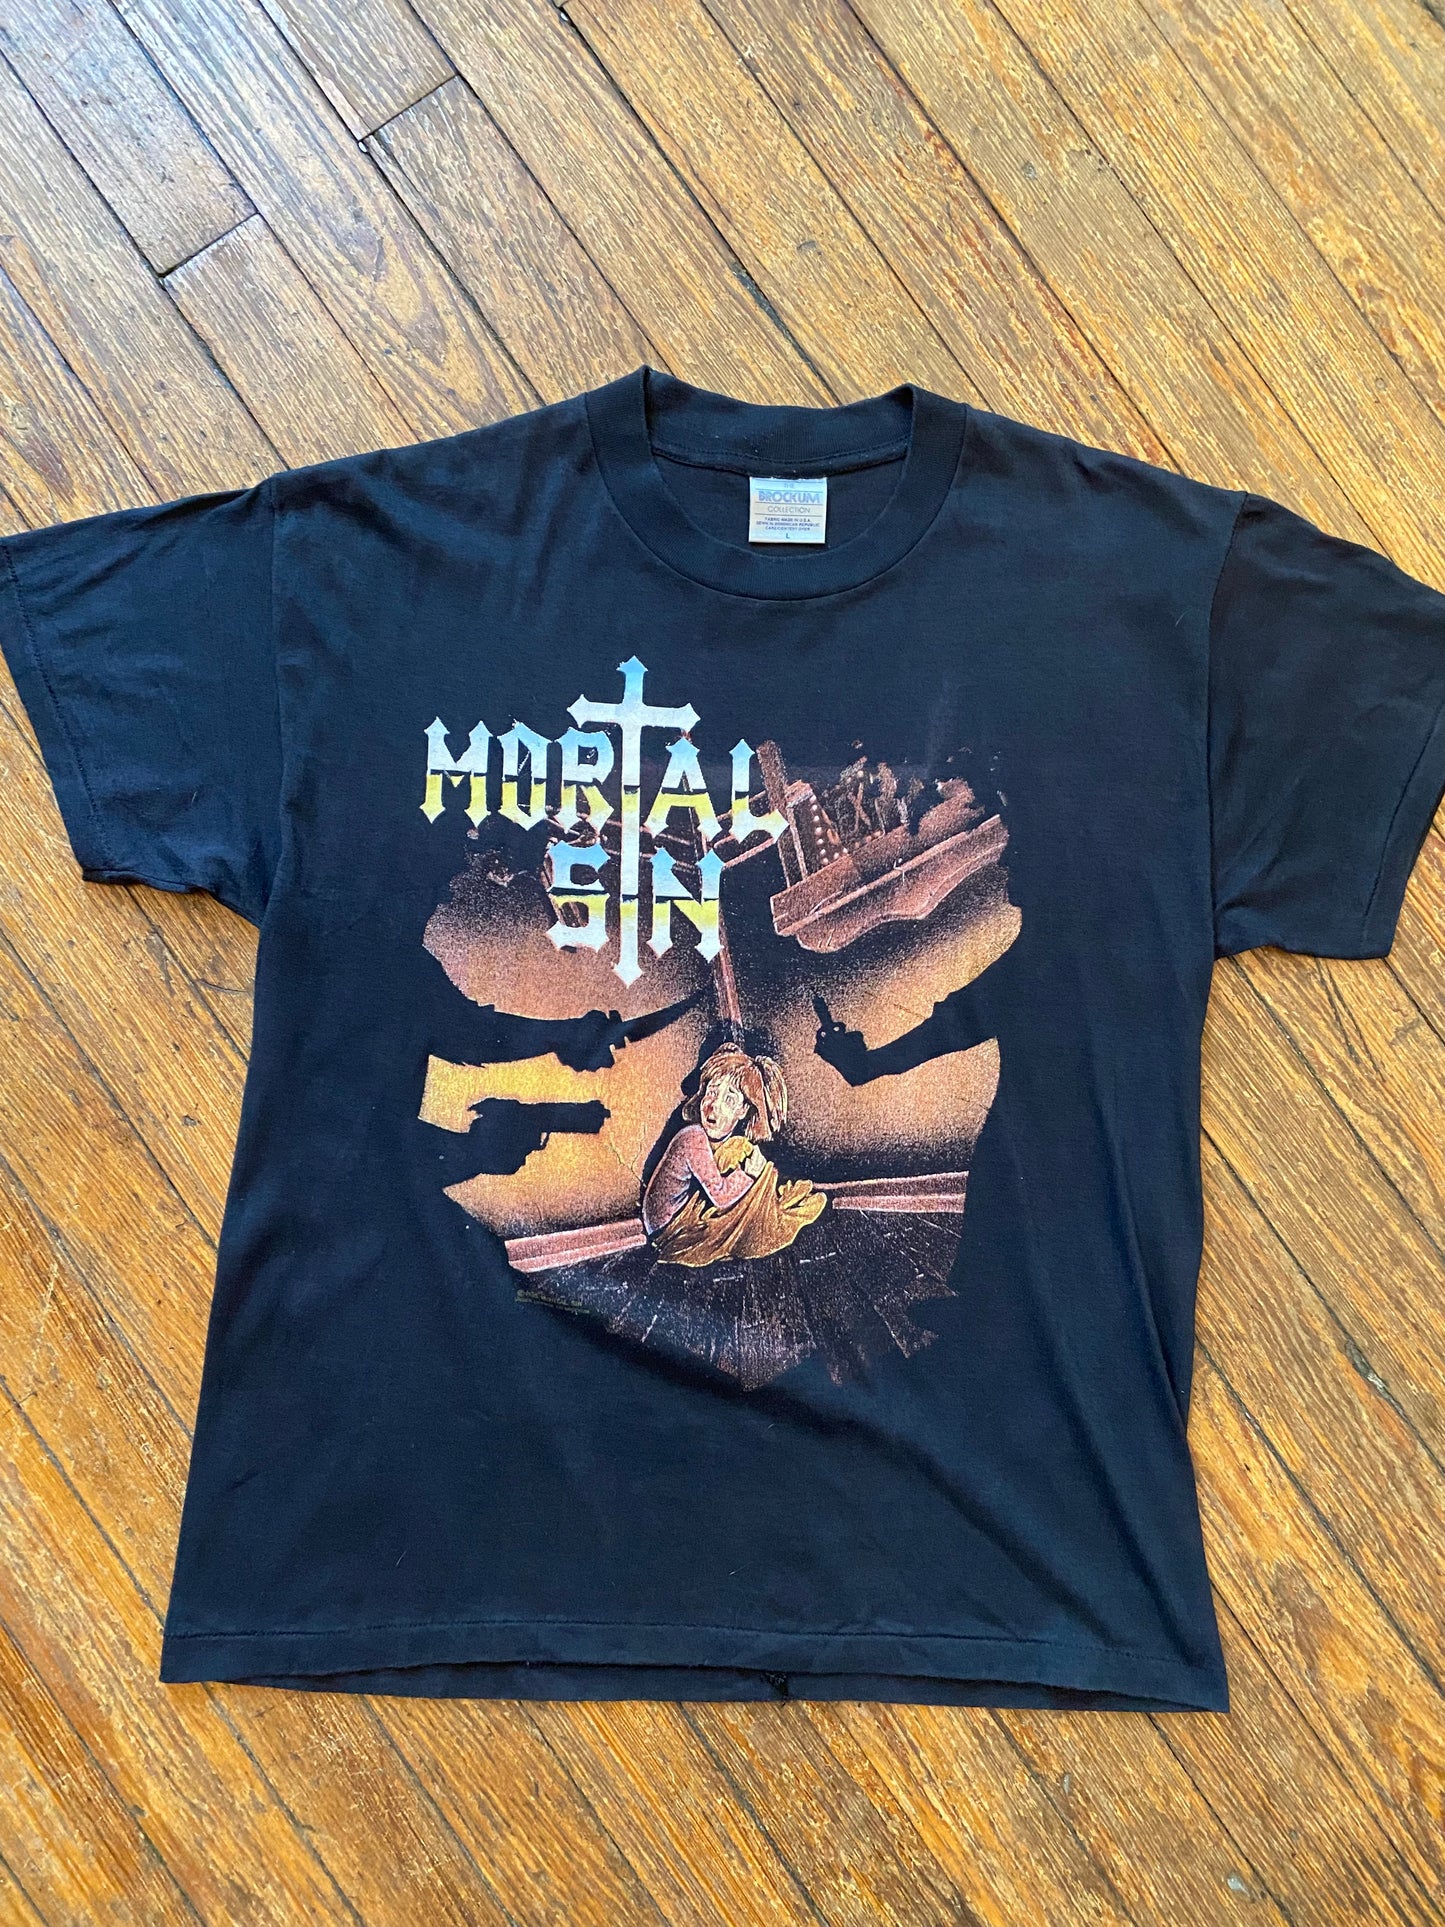 Vintage Mortal Sin T-Shirt